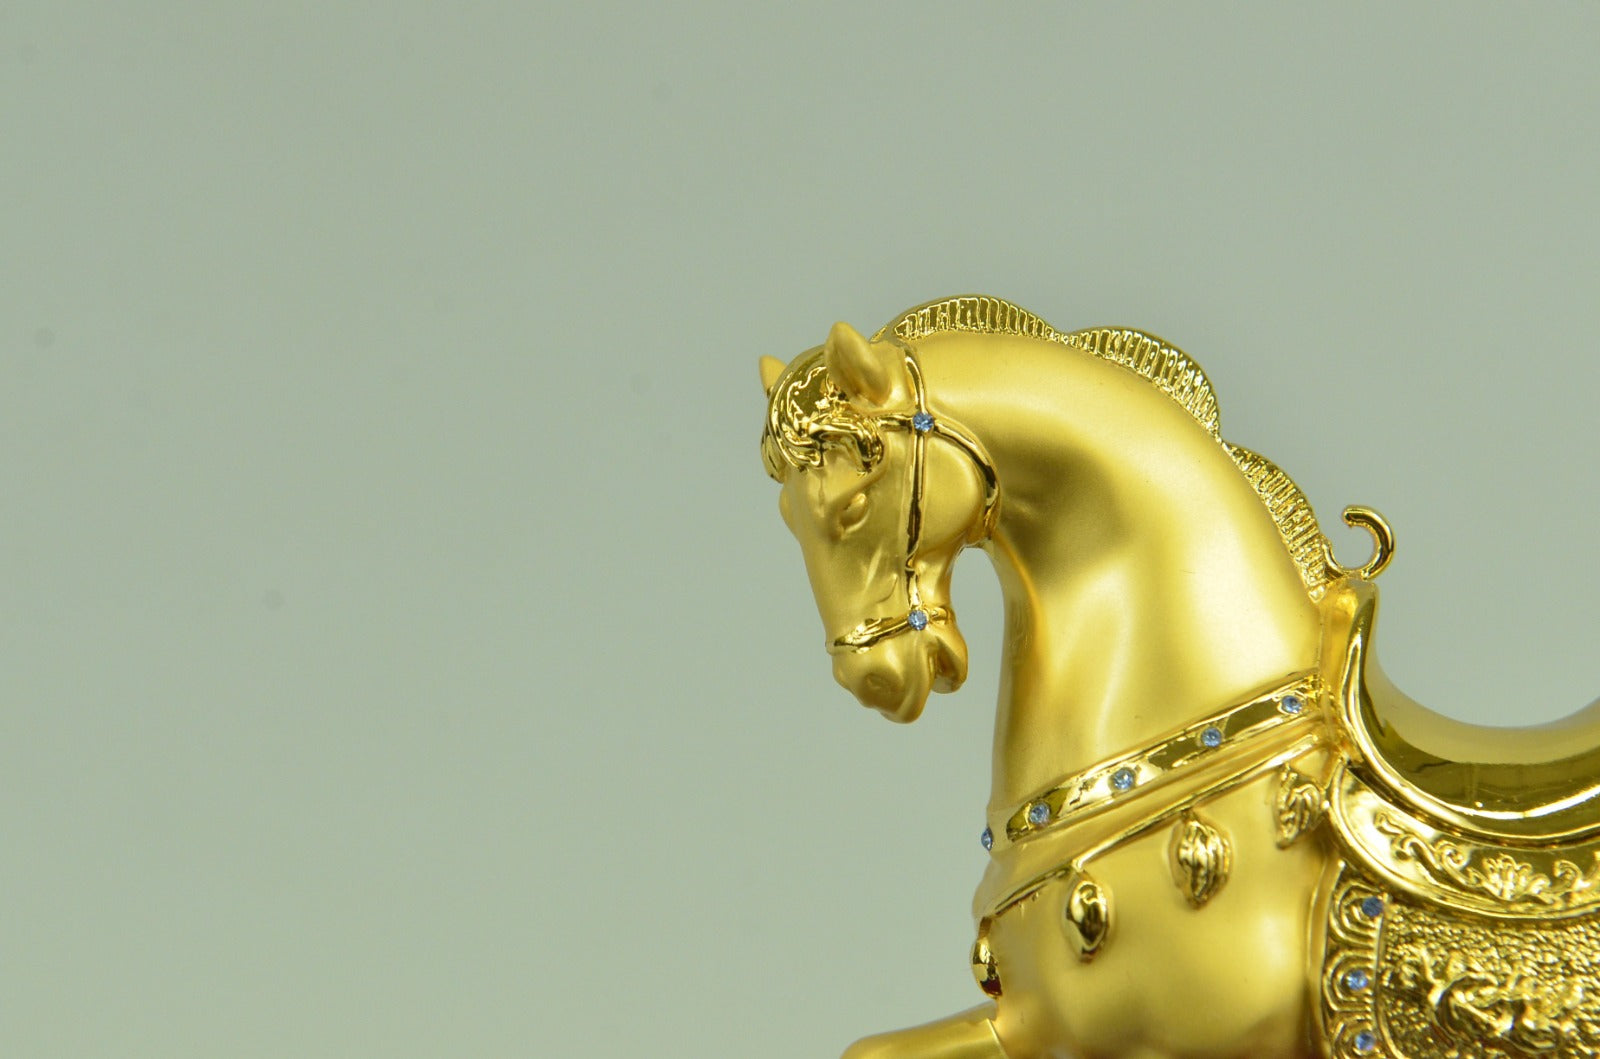 Hot cast by Lost Wax 24K Gold Tang Horse Bronze Sculpture Figurine Figure Decor